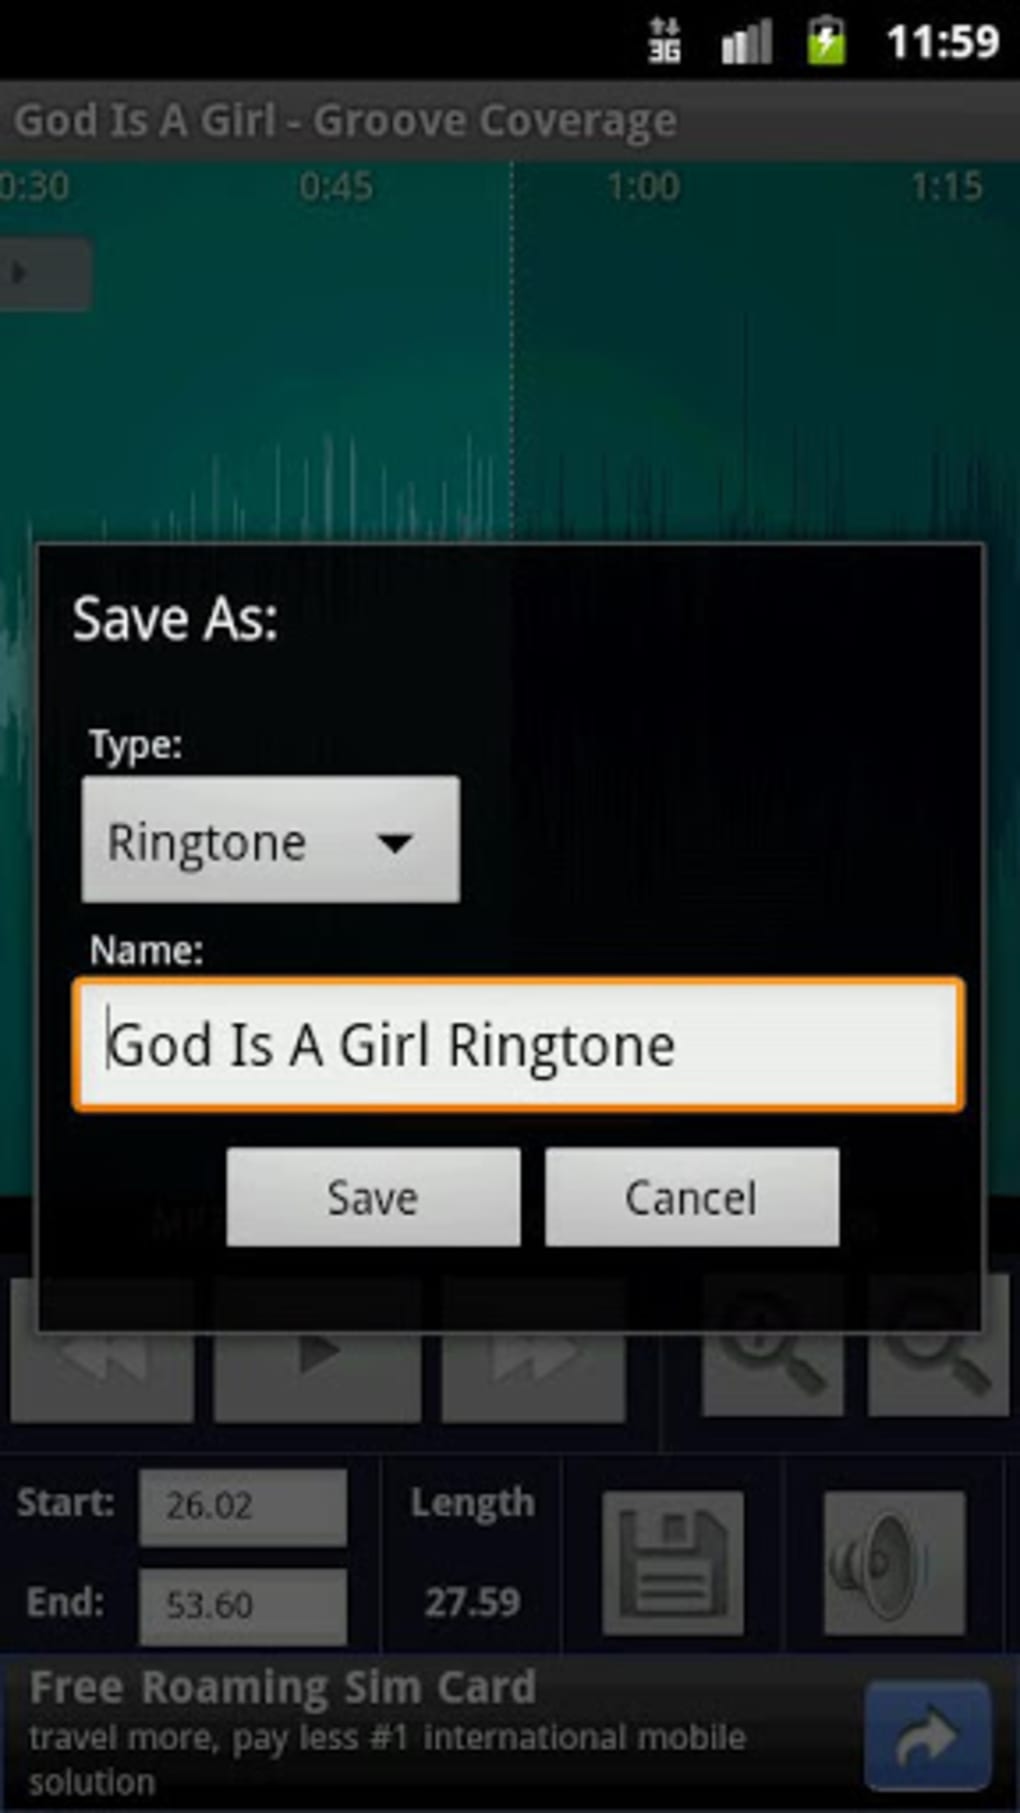 best free ringtone maker app for android